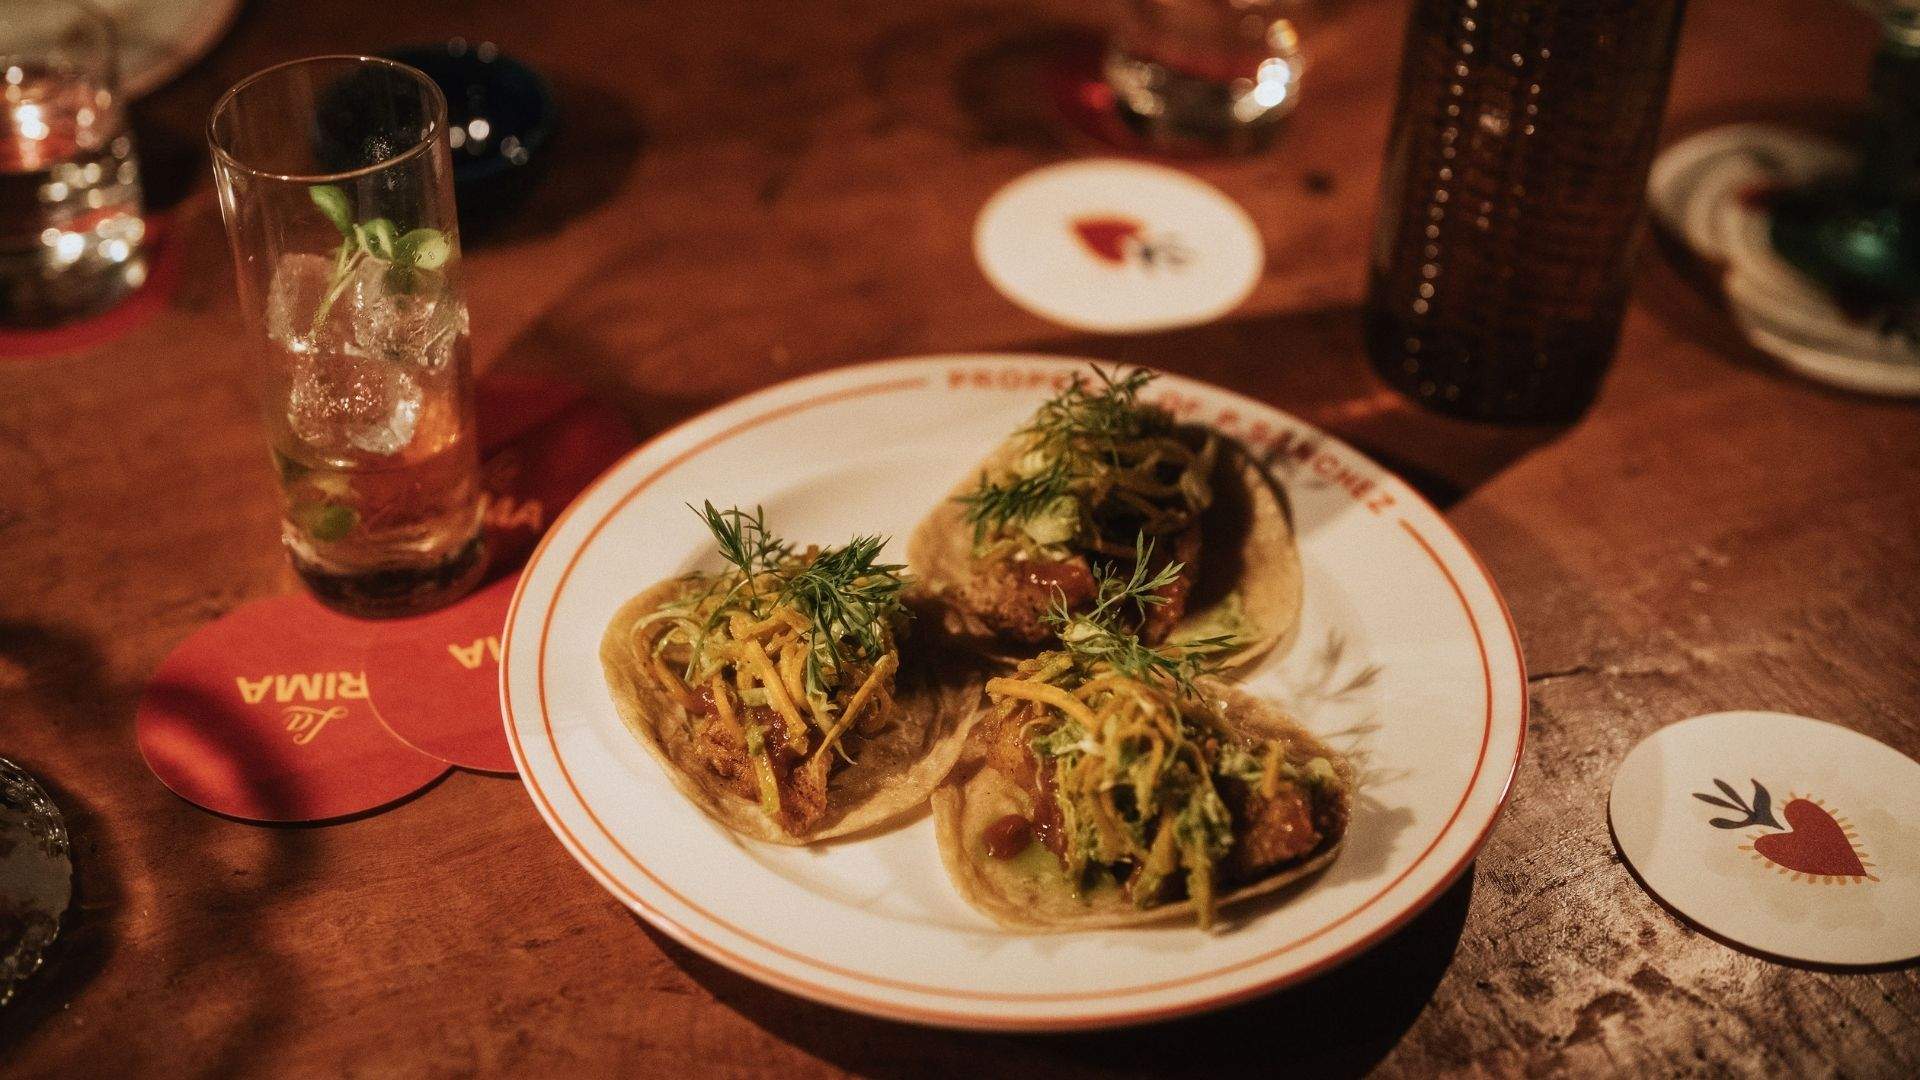 Bites (tacos) from the El Primo Sanchez menu alongside exclusive cocktails available at its hidden speakeasy, La Prima.